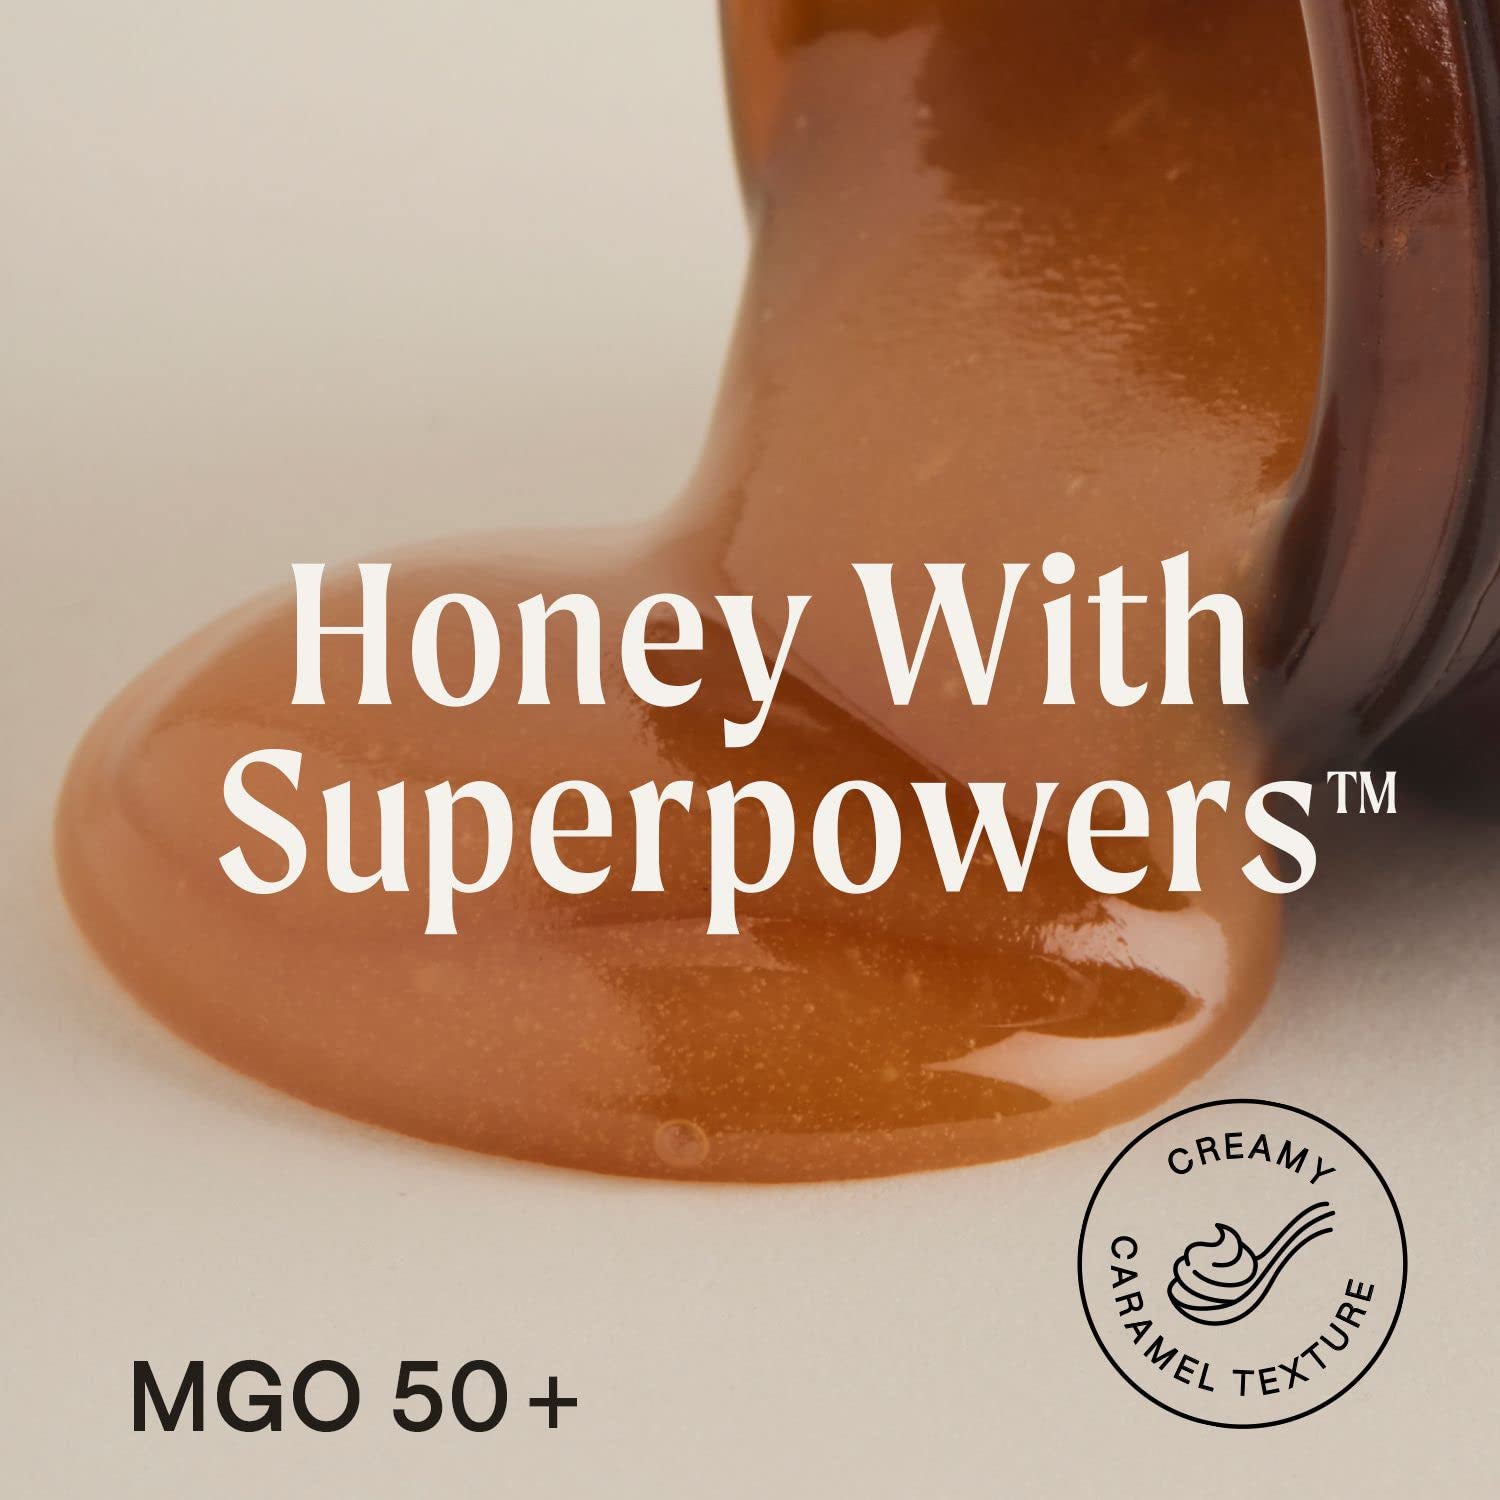 Manukora Raw Manuka Honey, MGO 50+, New Zealand Honey, Non-Gmo, Traceable from Hive to Hand, Daily Wellness Support - 250G (8.82 Oz)